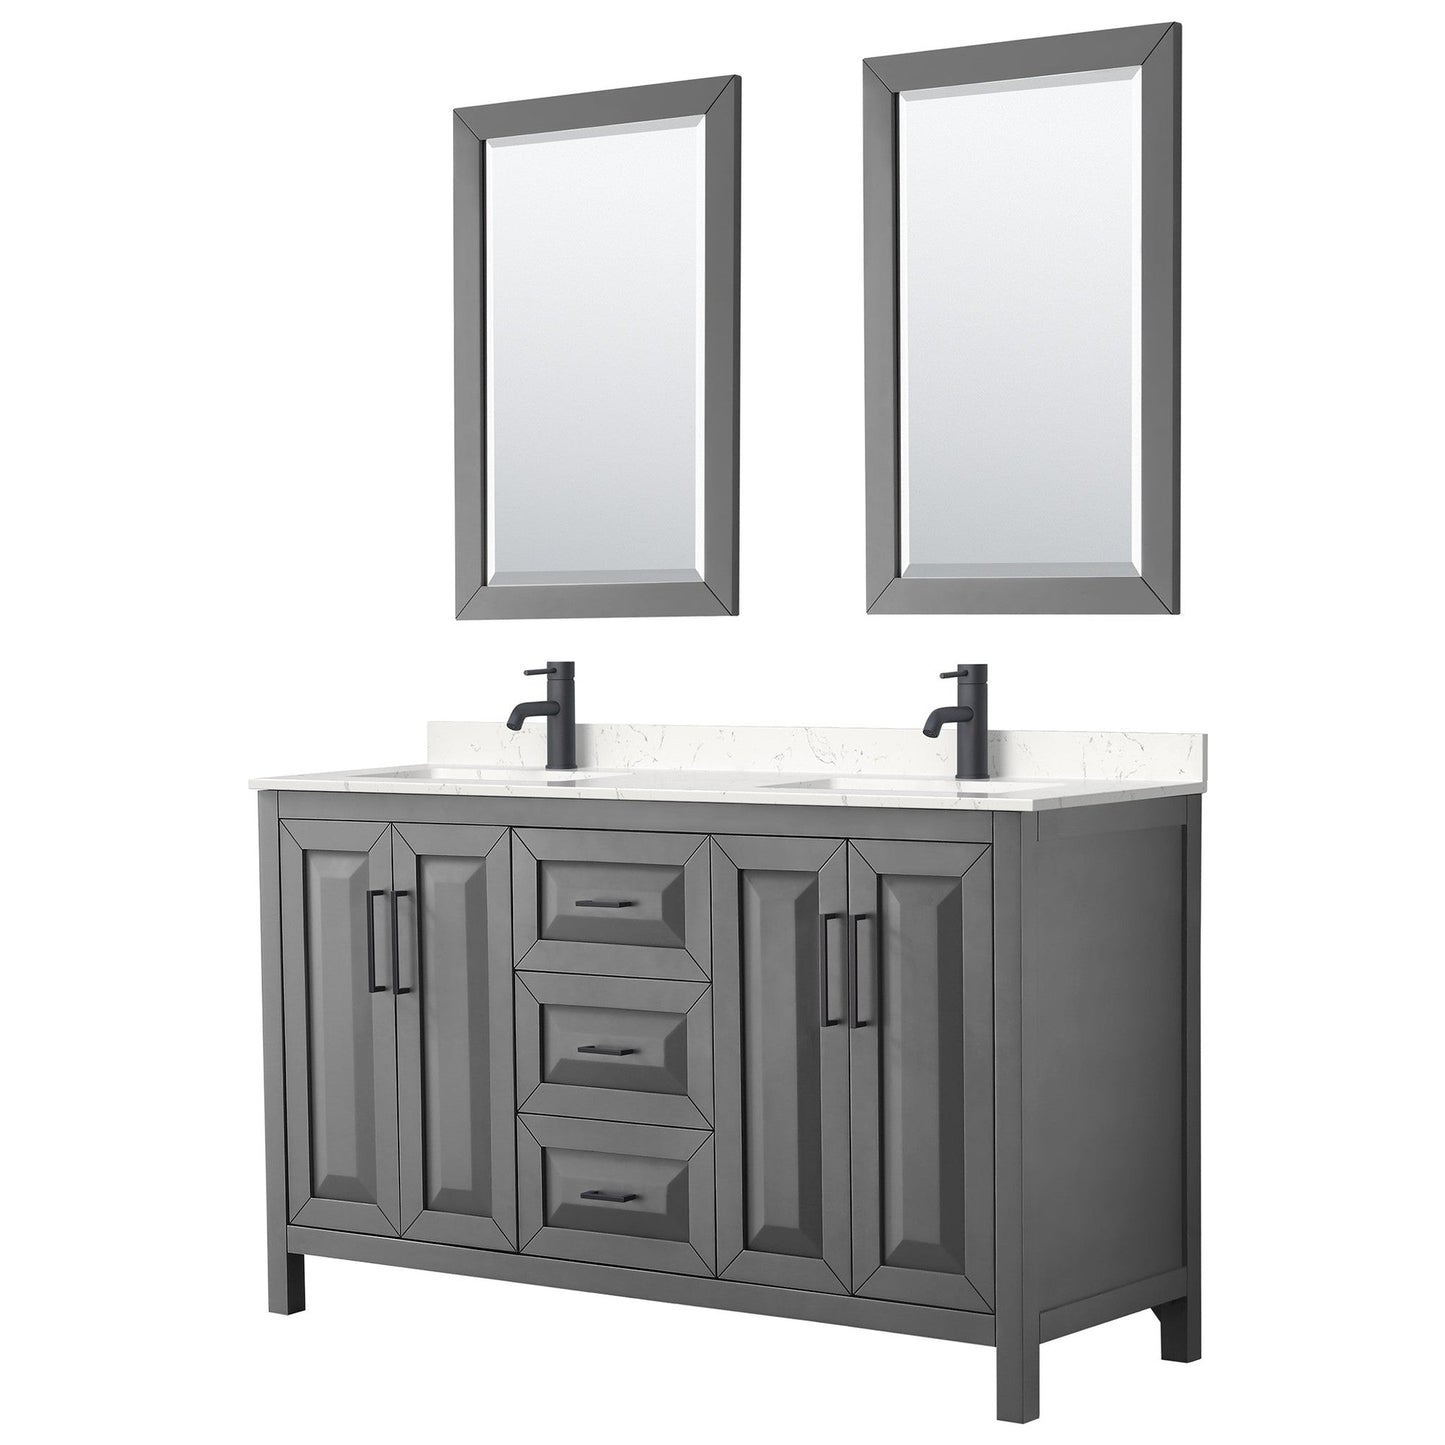 Daria 60" Double Bathroom Vanity in Dark Gray, Carrara Cultured Marble Countertop, Undermount Square Sinks, Matte Black Trim, 24" Mirrors